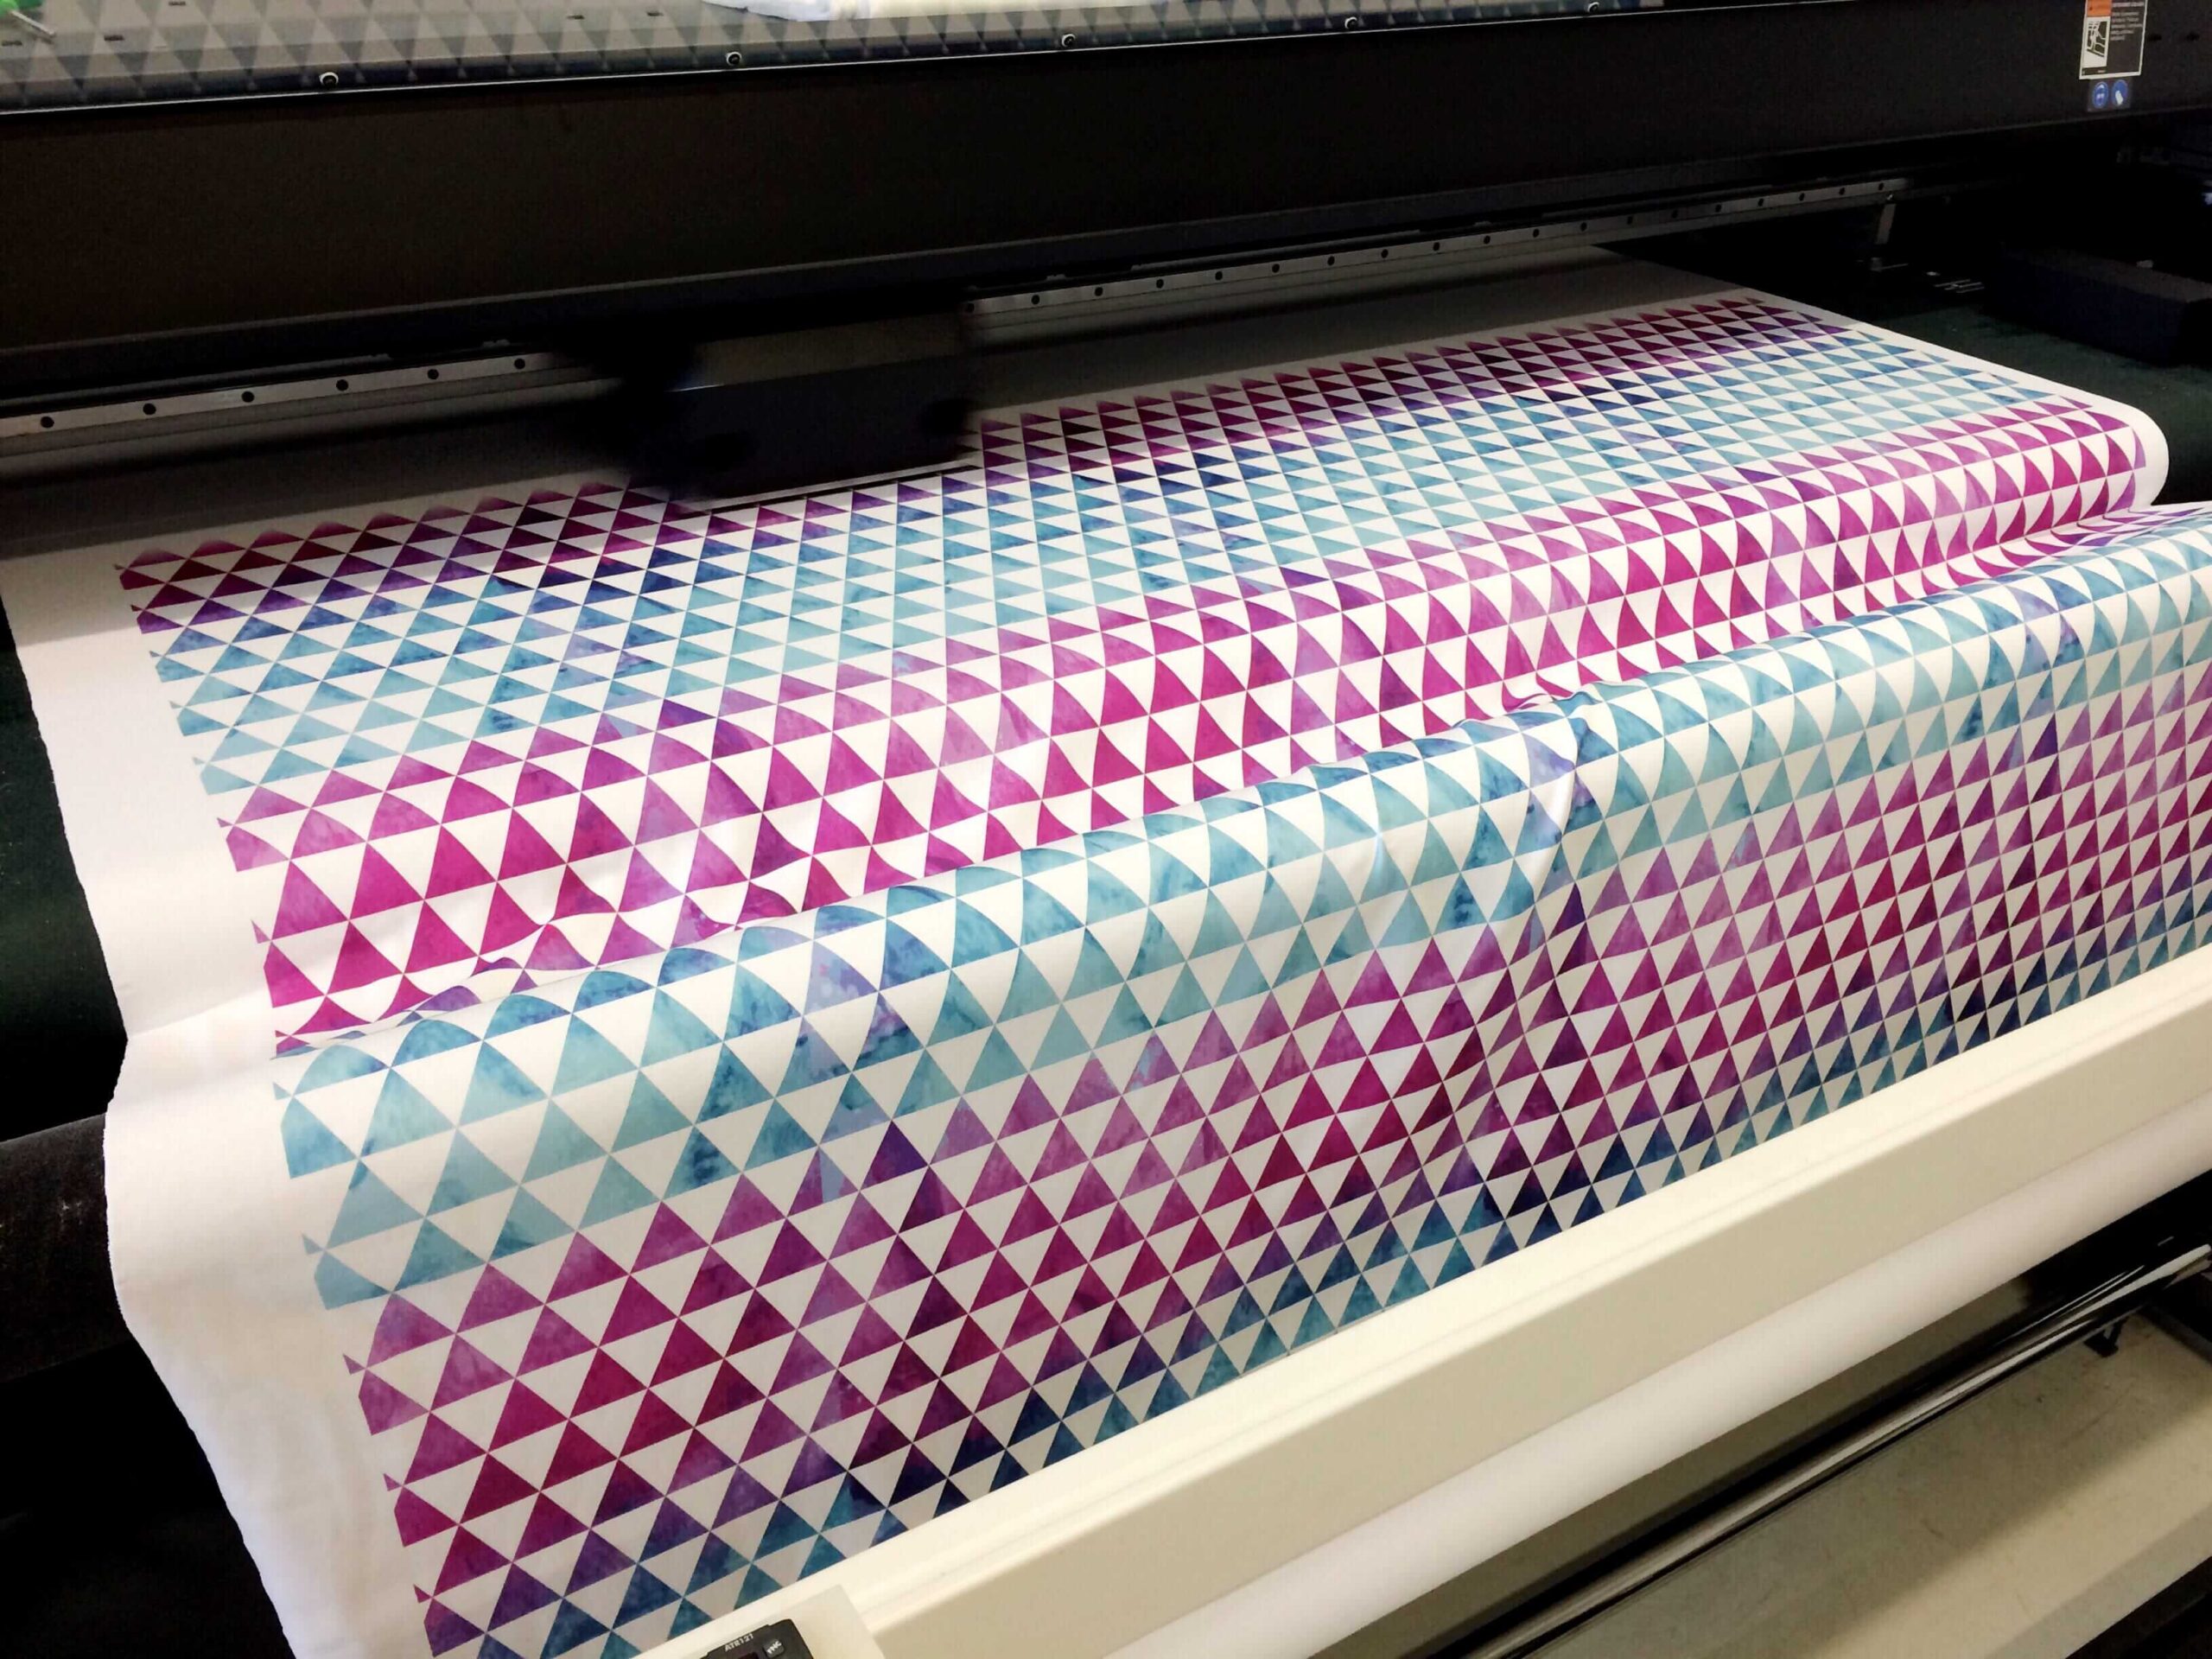 fabric printing